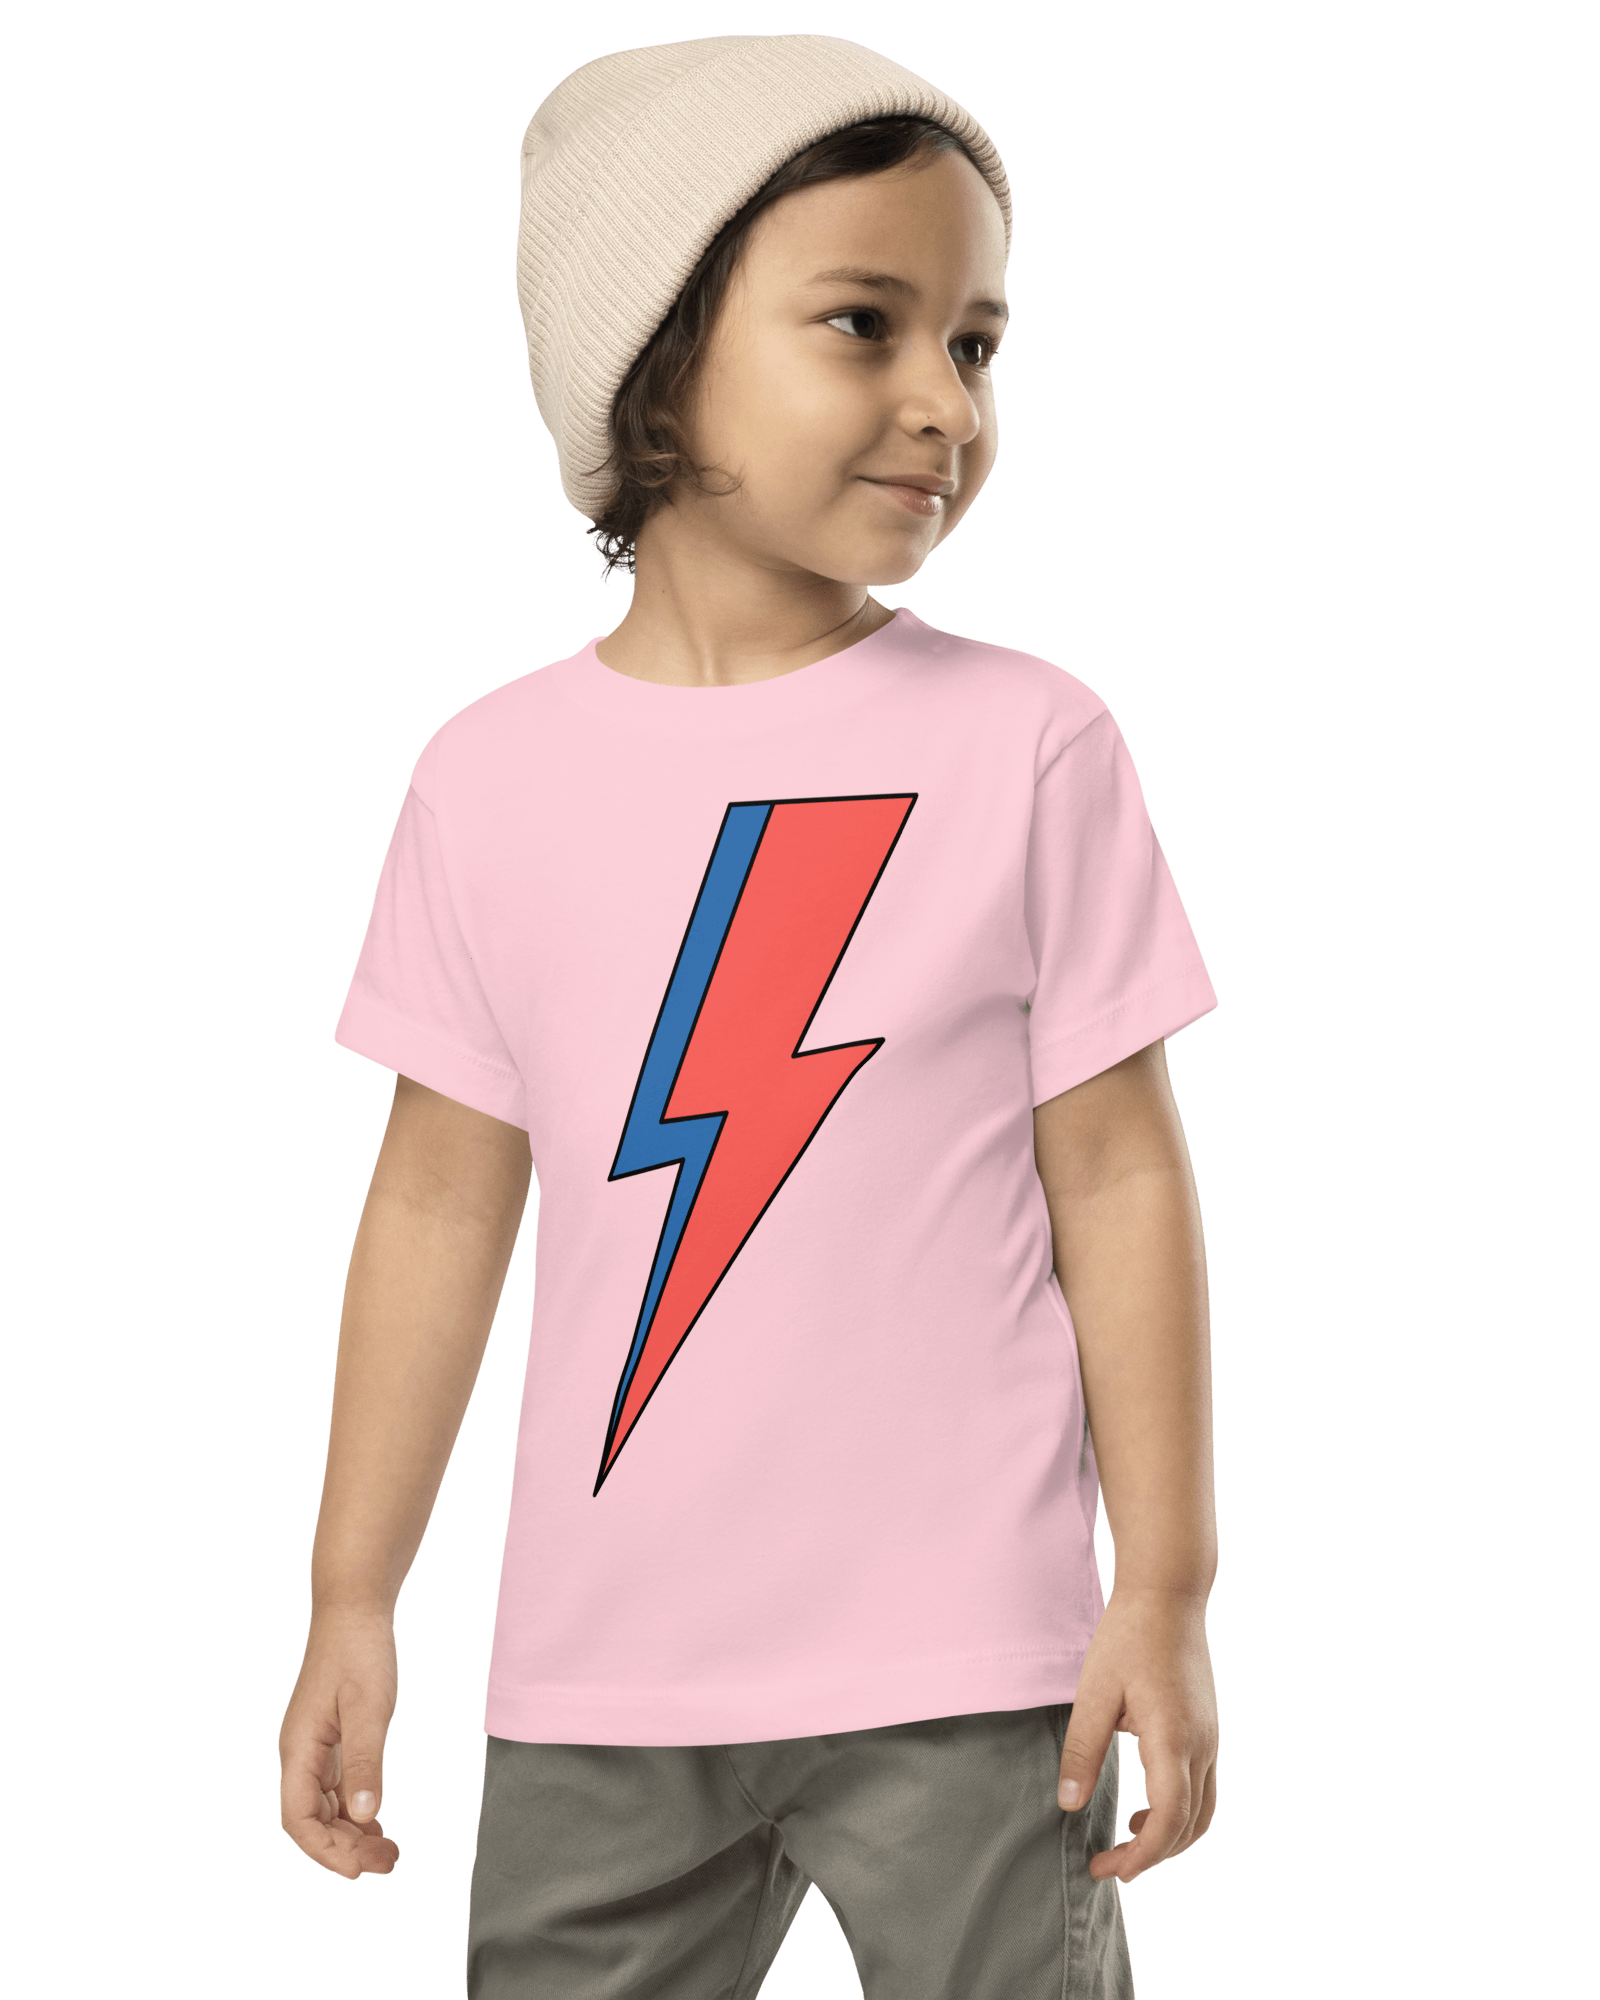 Lightning Bolt Toddler T-shirt Pink / 2T Baby & Toddler Tops Jolly & Goode